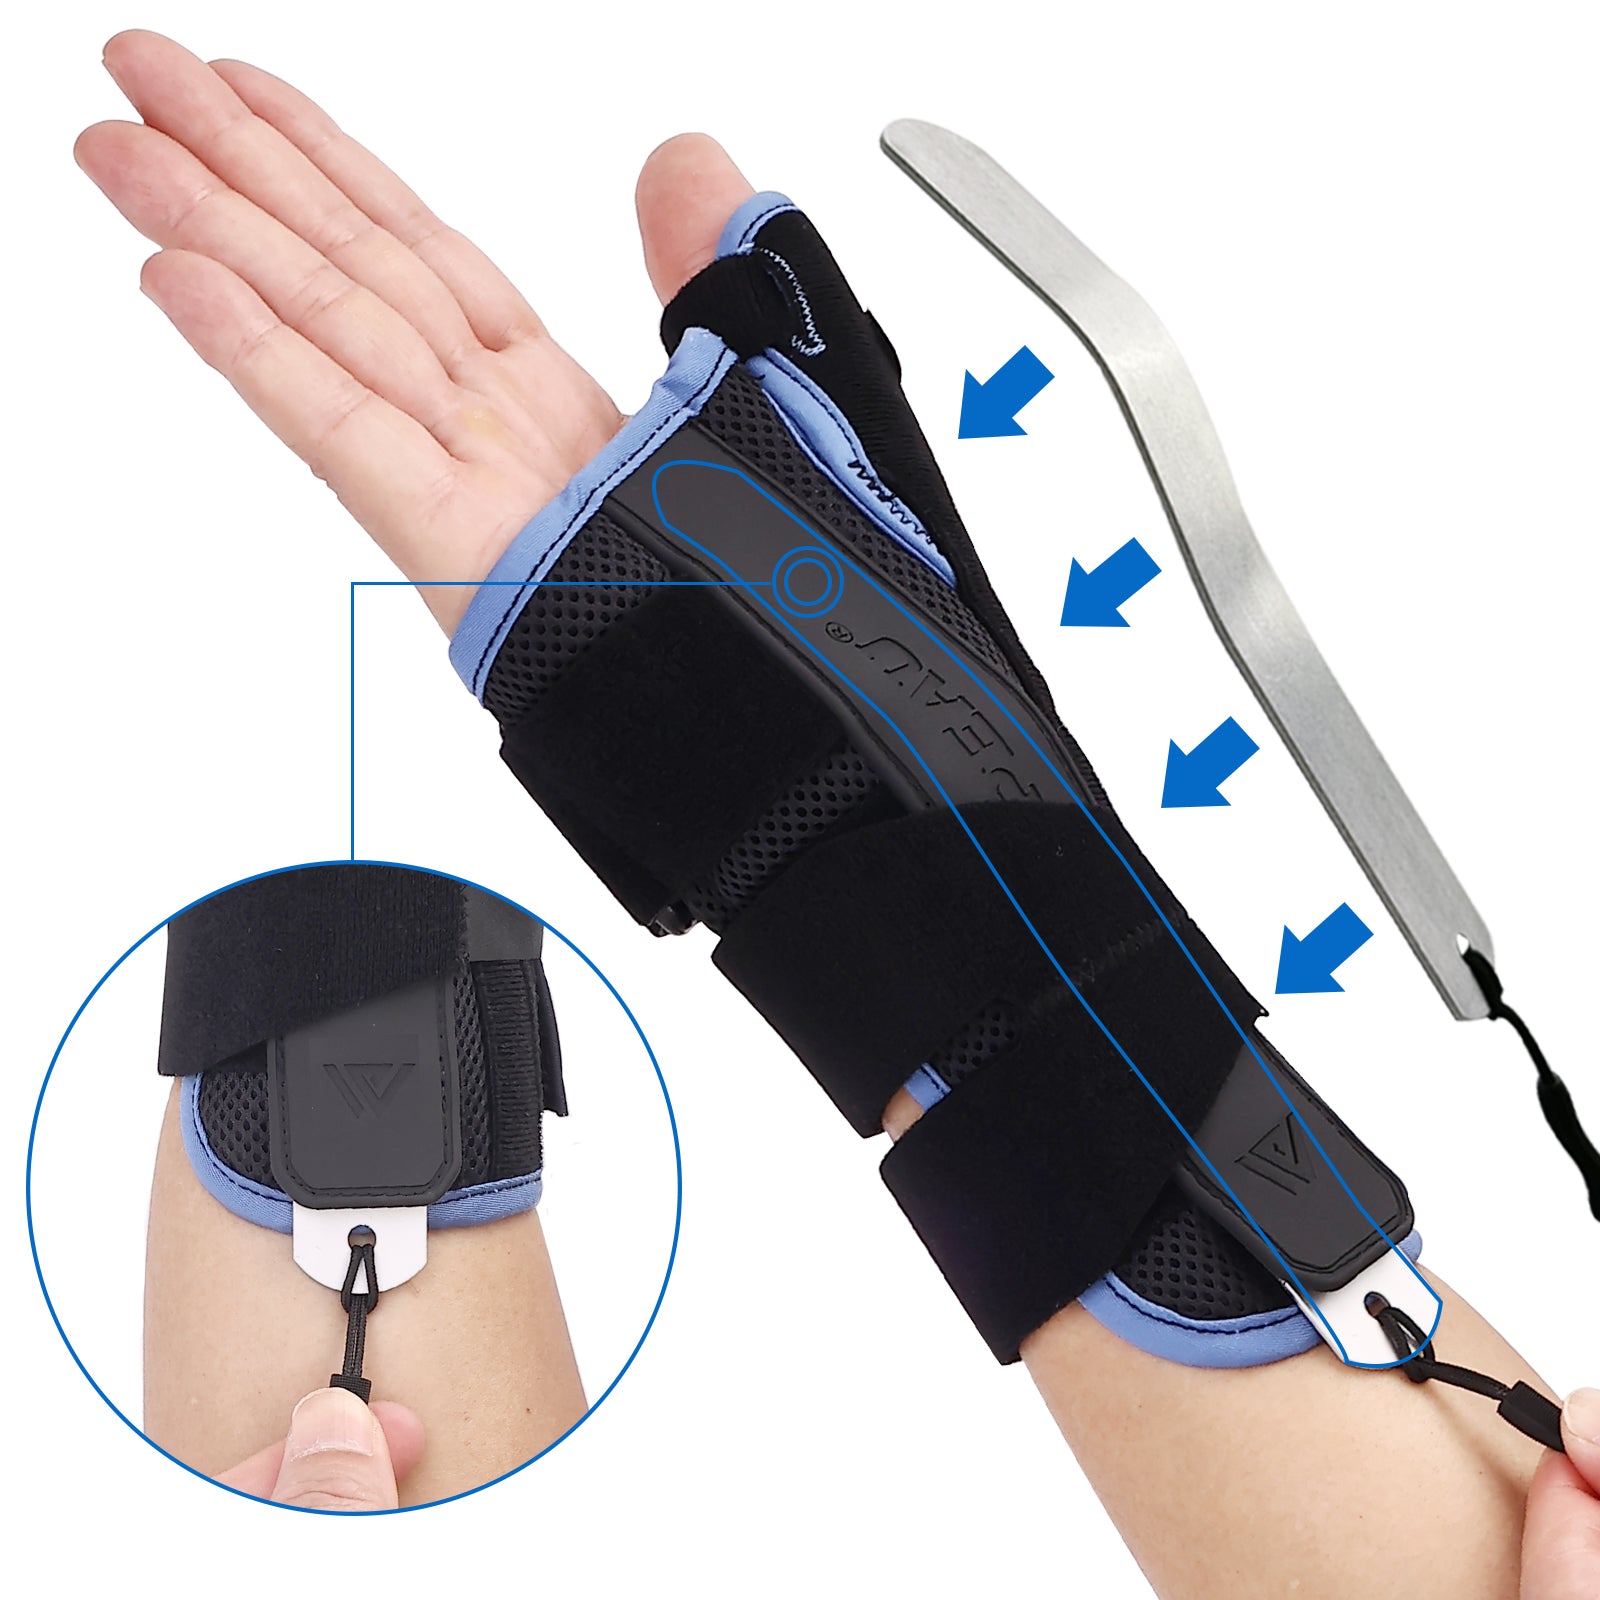 VP0906 VELPEAU Wrist Brace Thumb Spica Splint Support